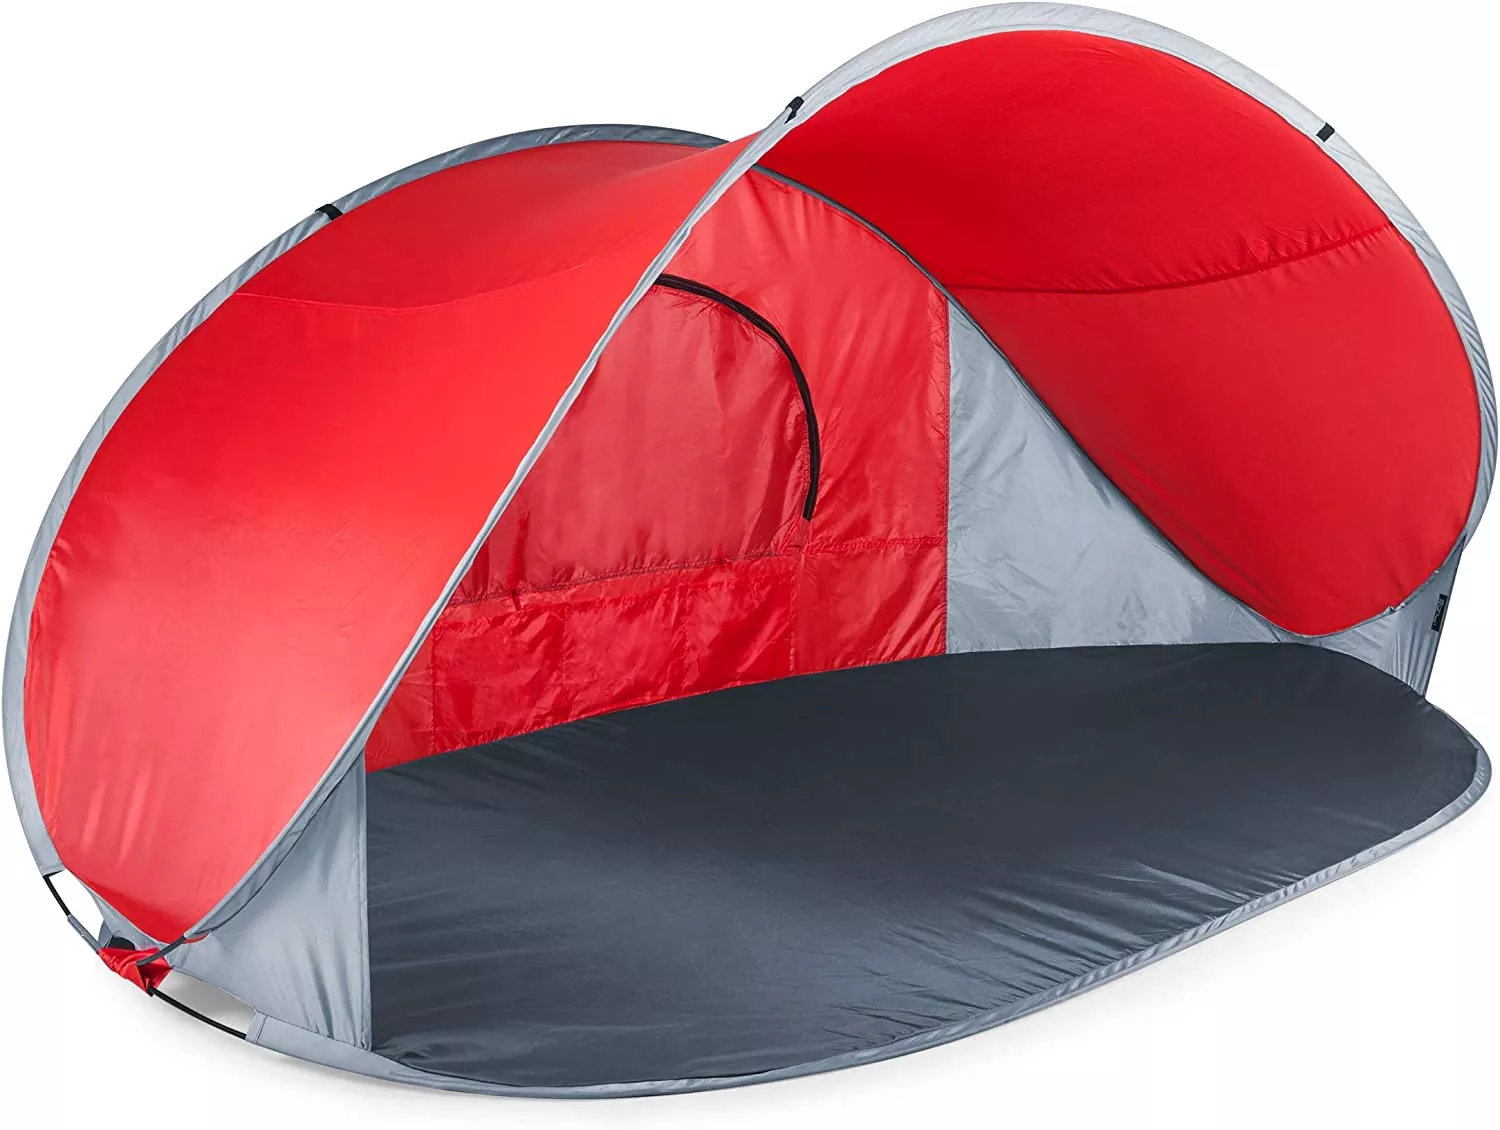 Waterproof Family Beach Tent